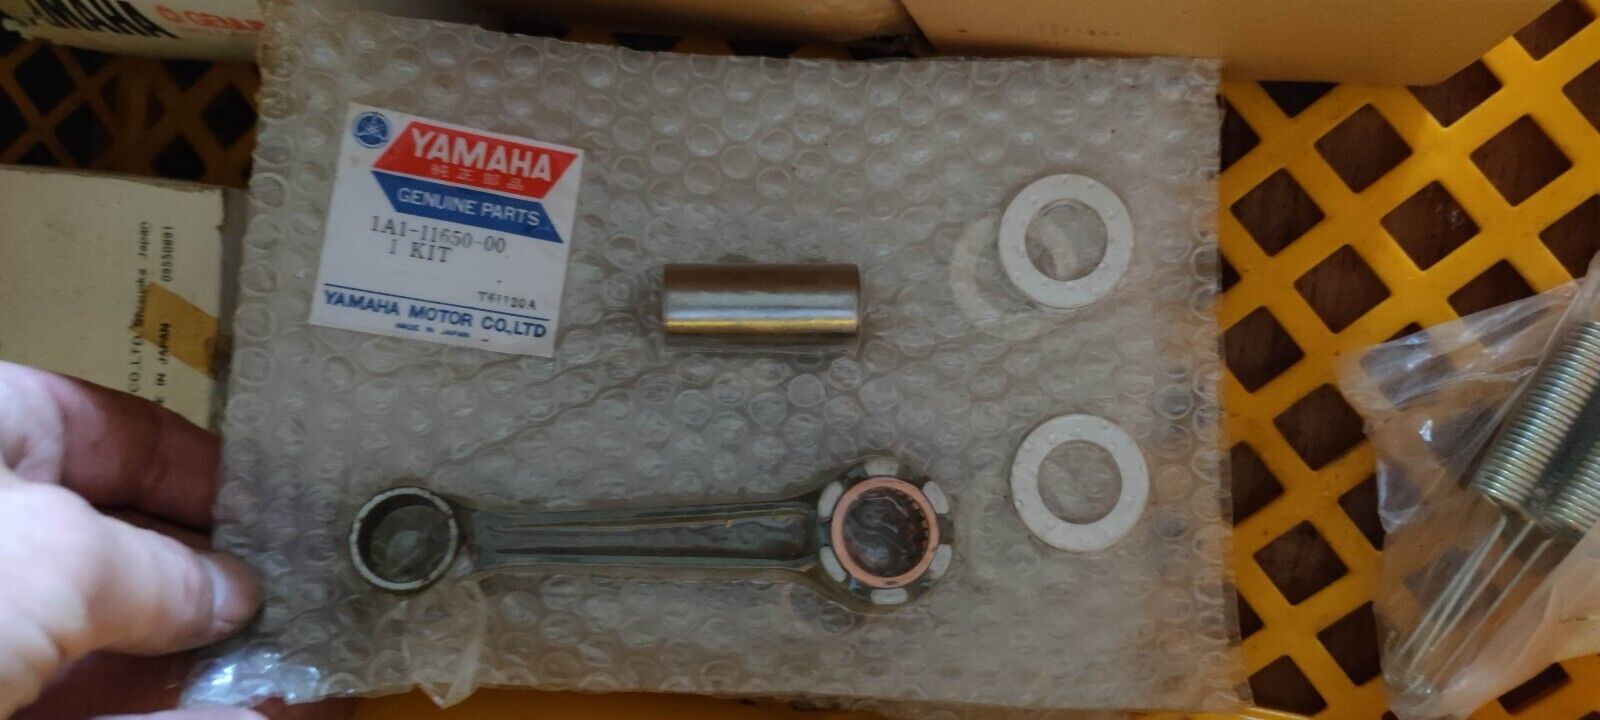 original NOS Ersatzteile Yamaha RD400 1x Pleuel Kit connecting rod 1A1 11650 00 2